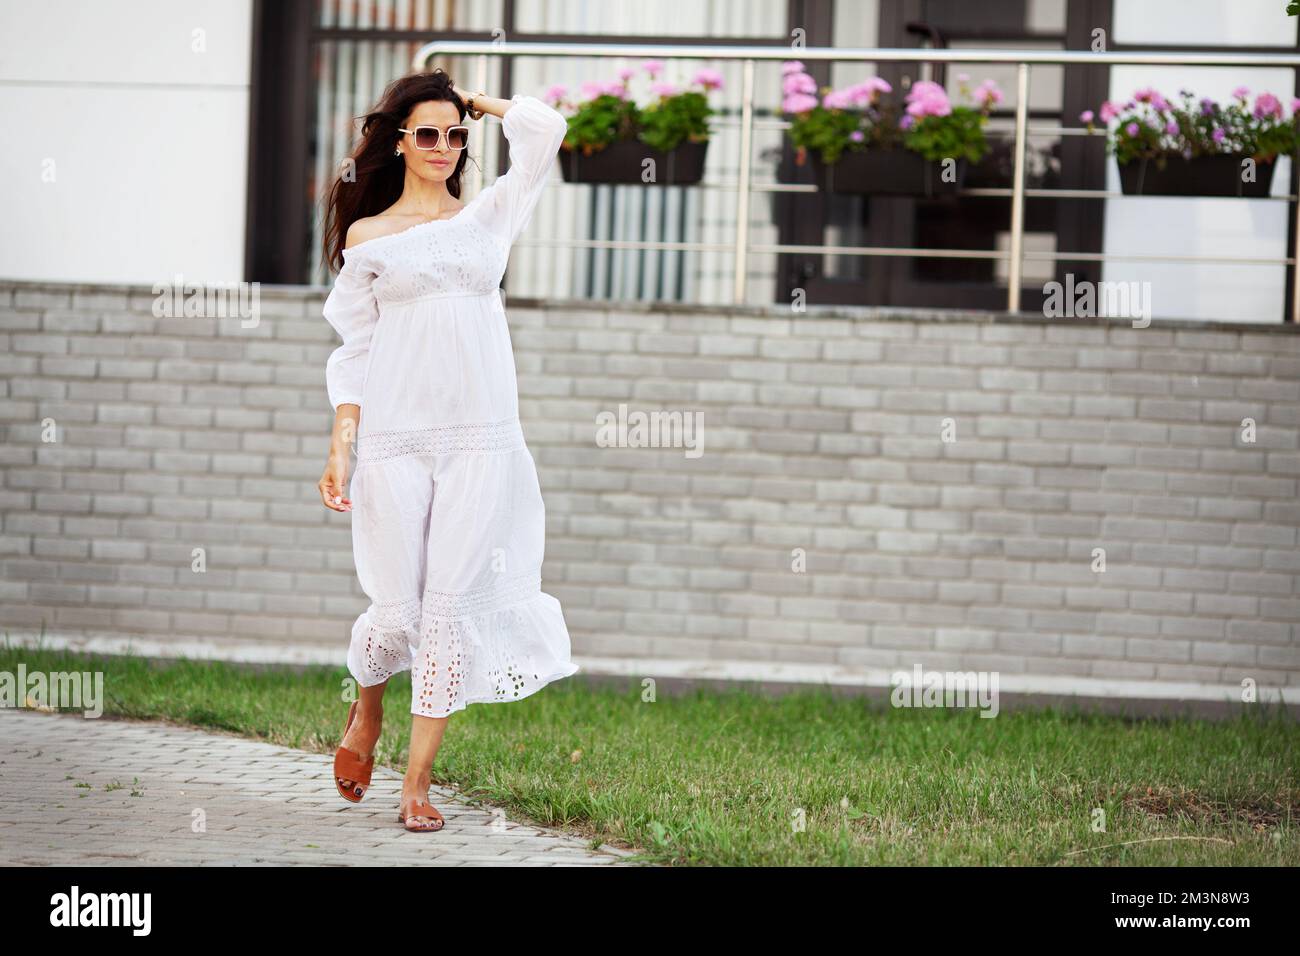 Walking woman. Beautiful model wearing fashionable summer white dress and white sunglasses Stock Photo